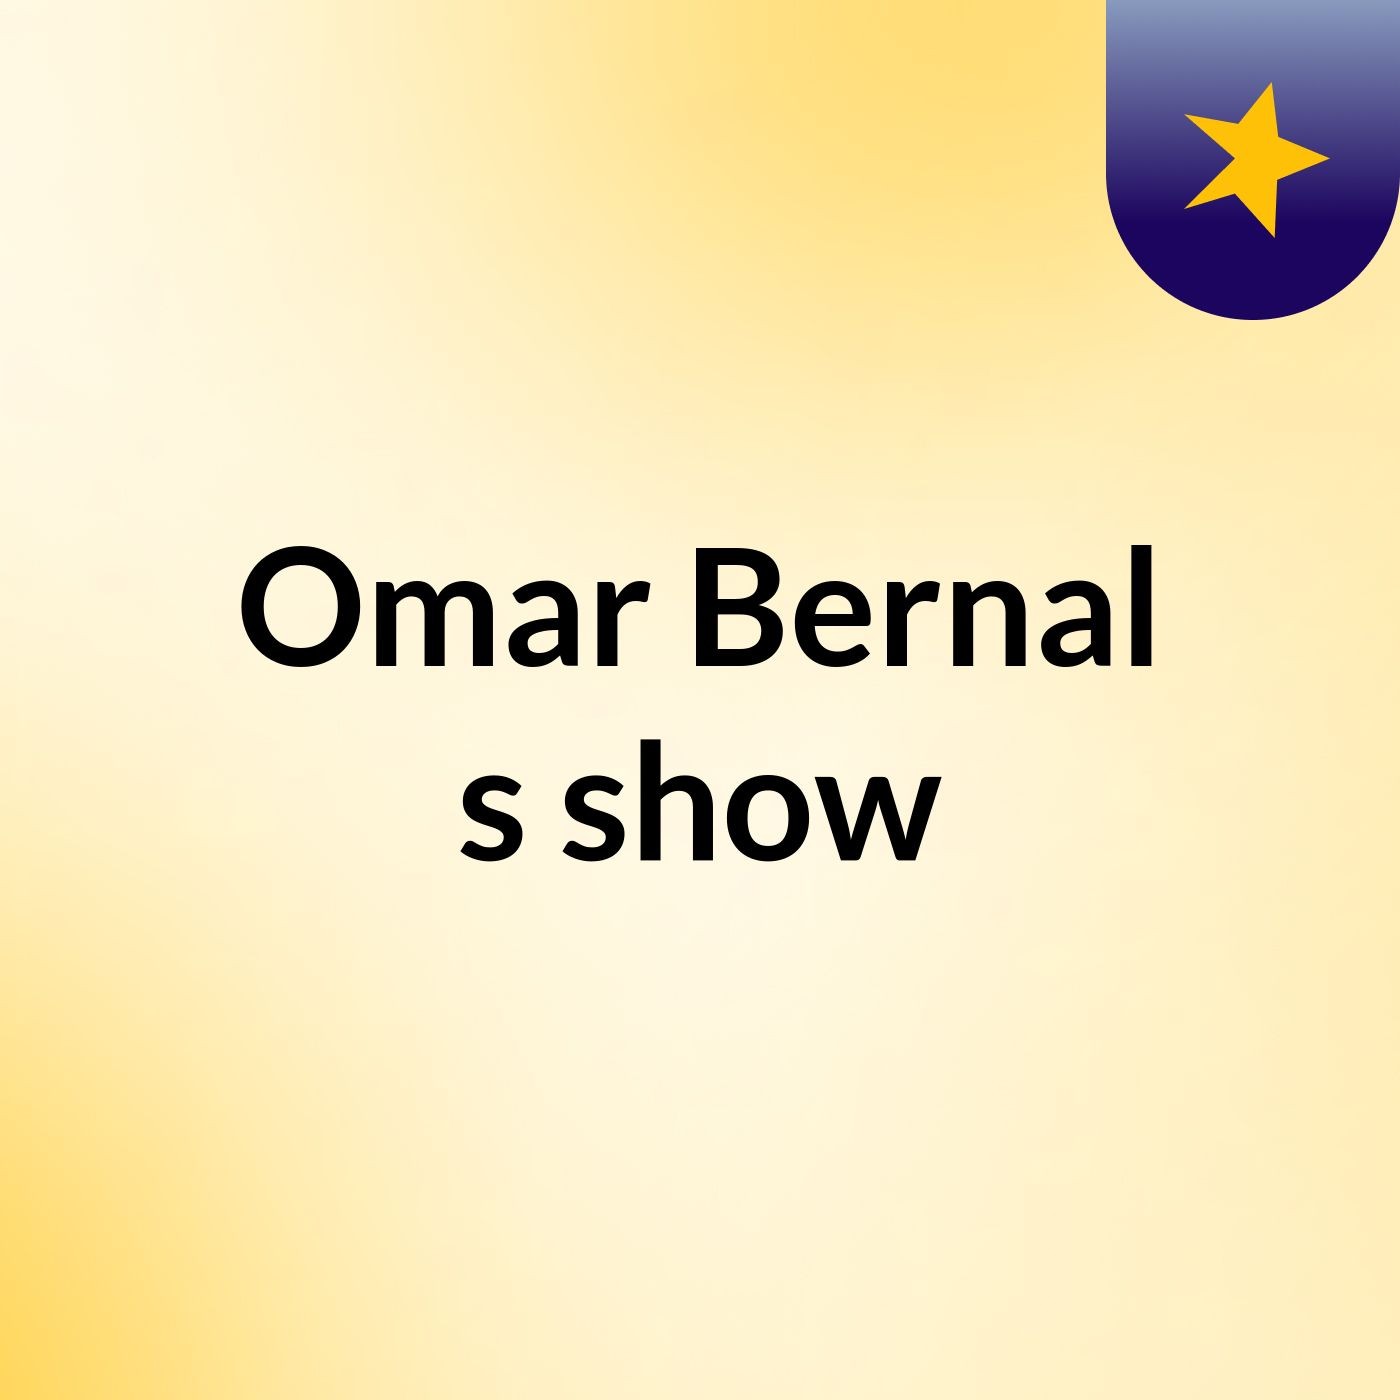 Omar Bernal's show